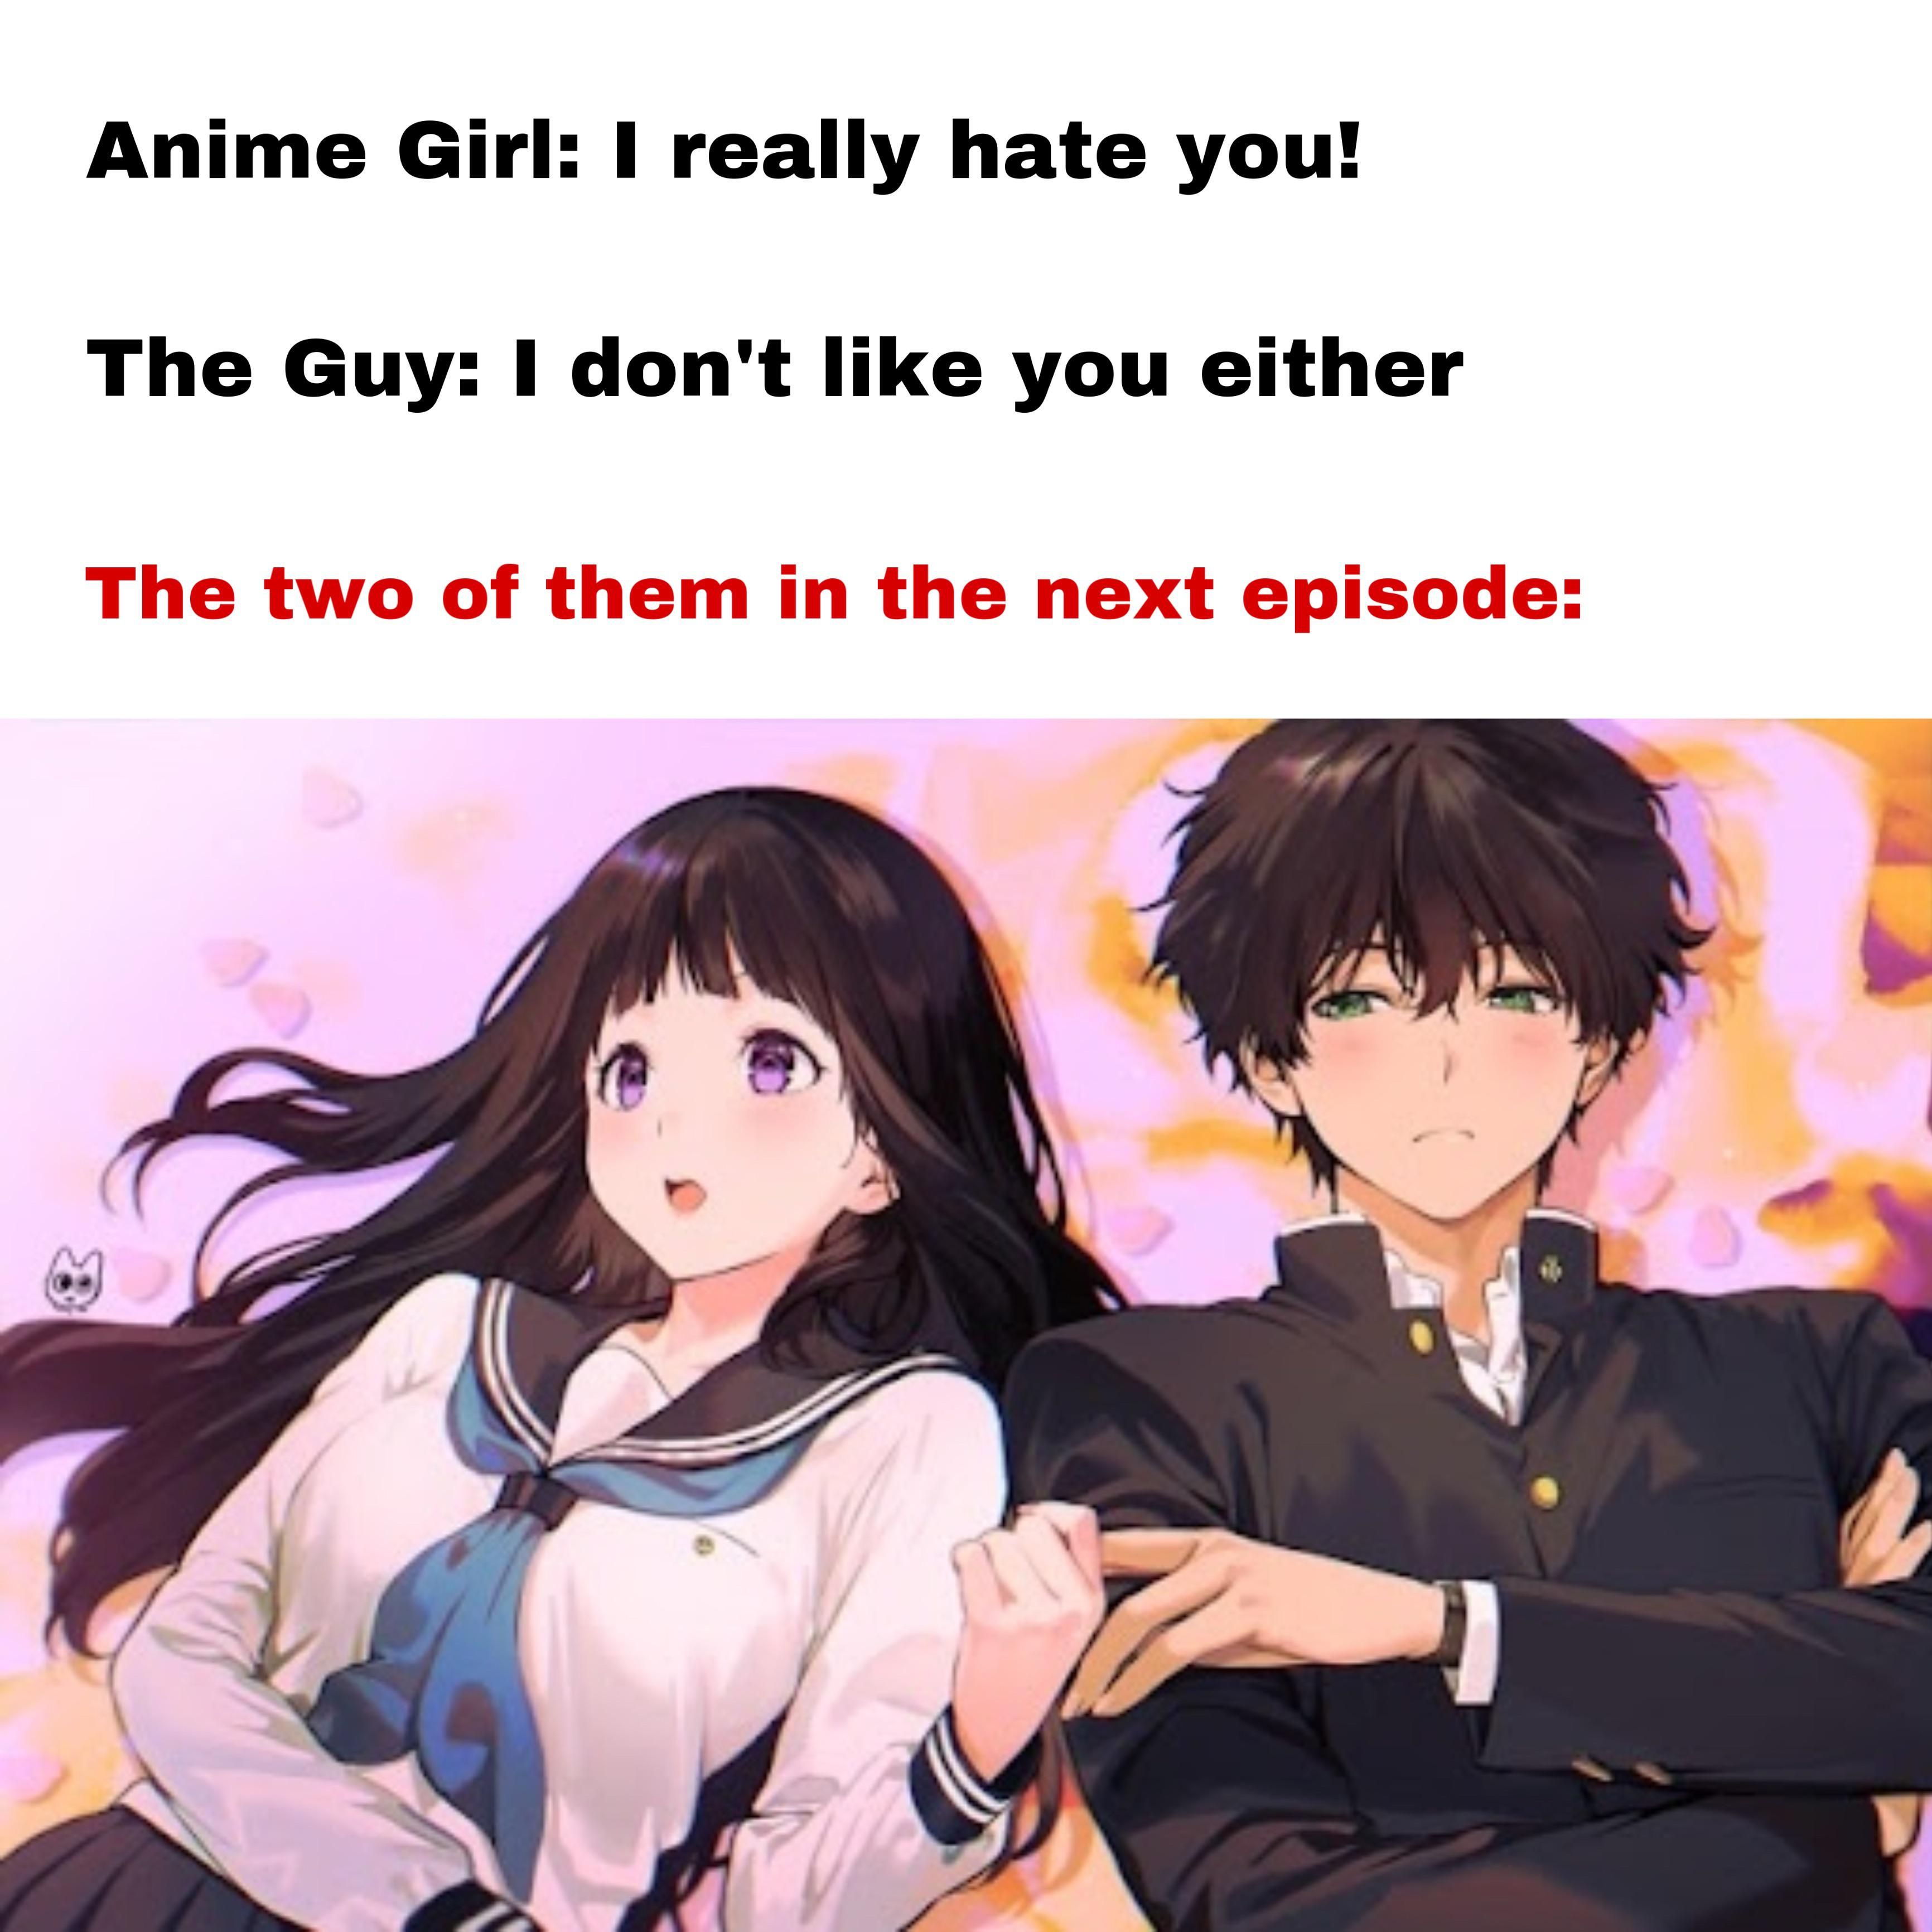 That's anime!